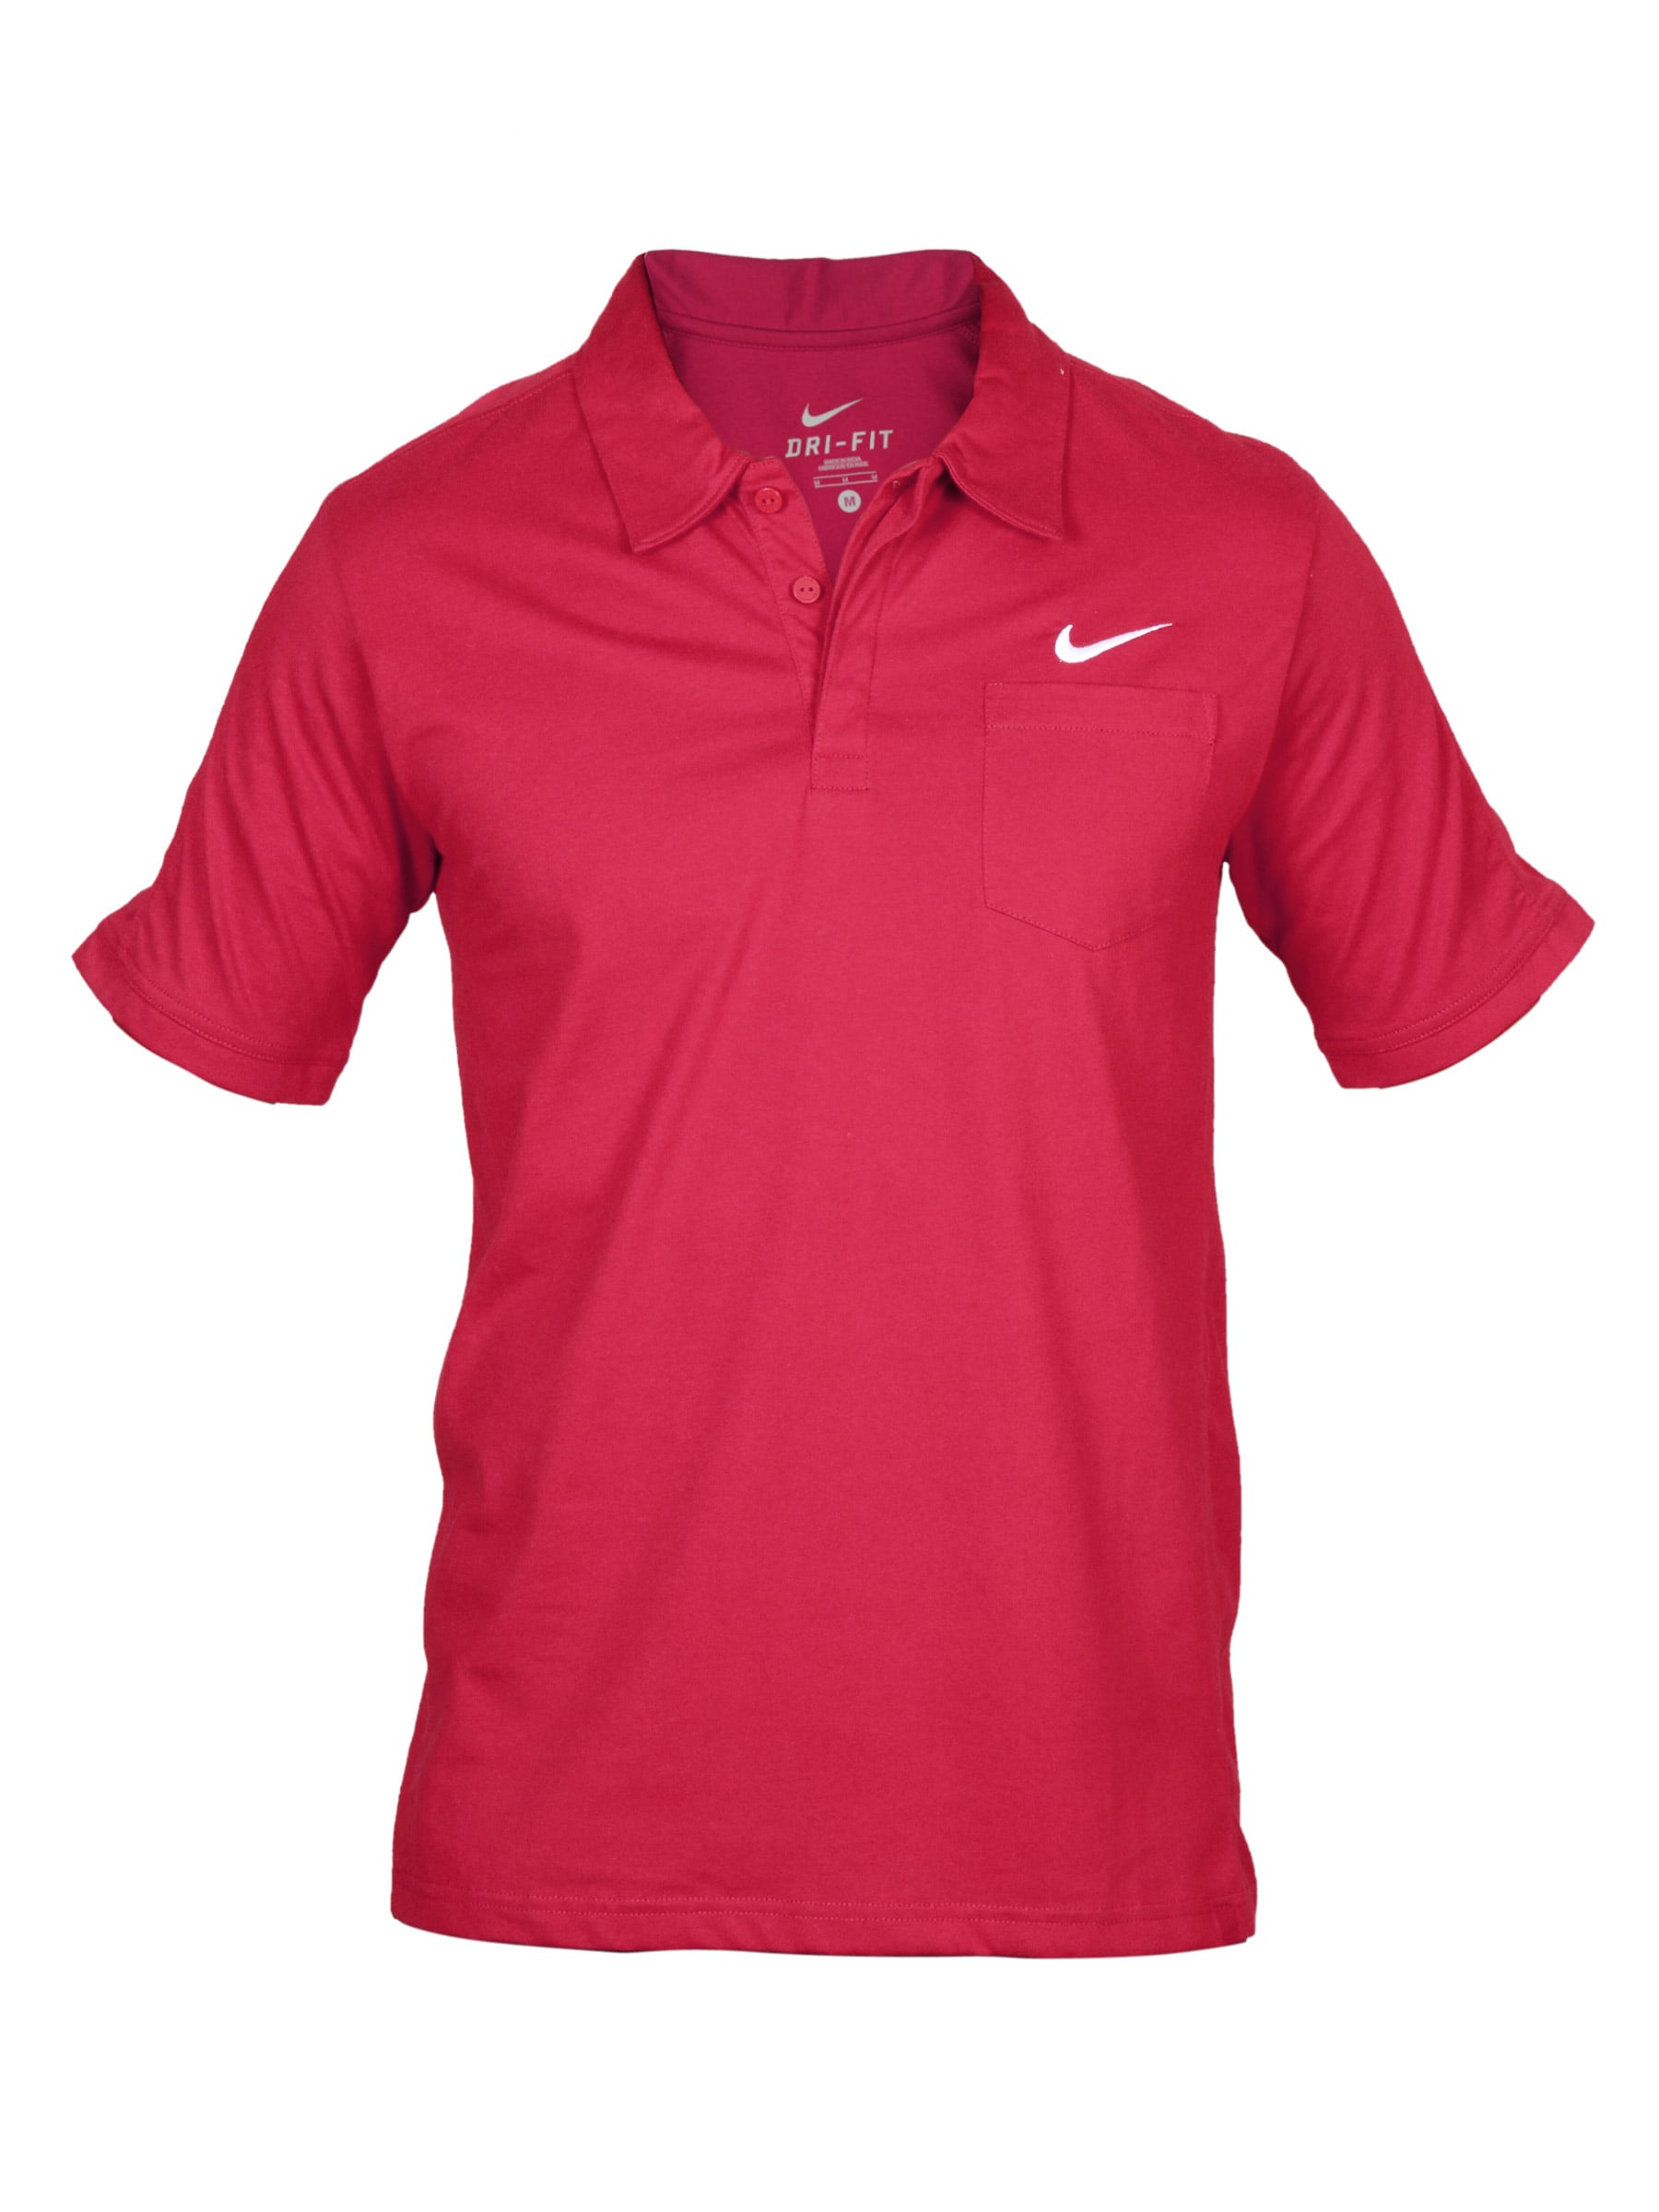 Nike Mens Red Polo T-shirt